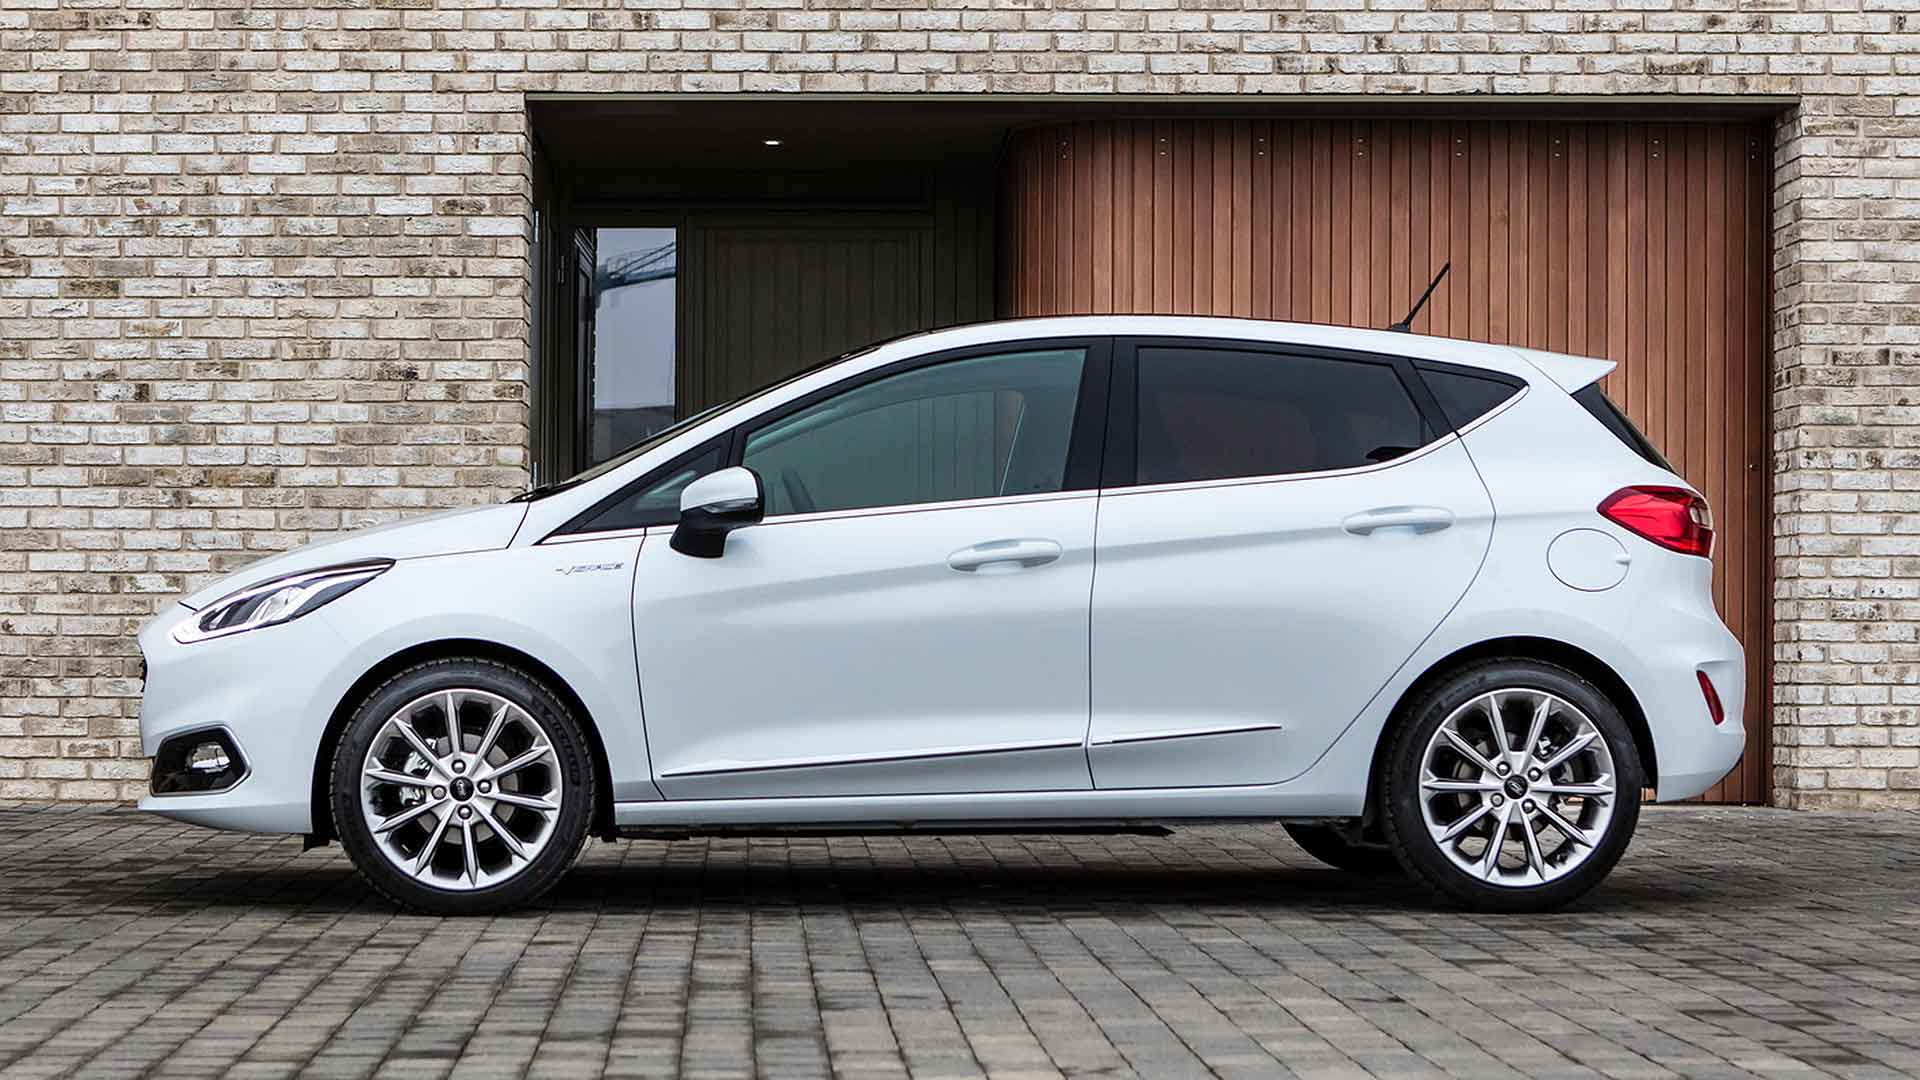 Ford Fiesta is Britain's best-selling car of 2019